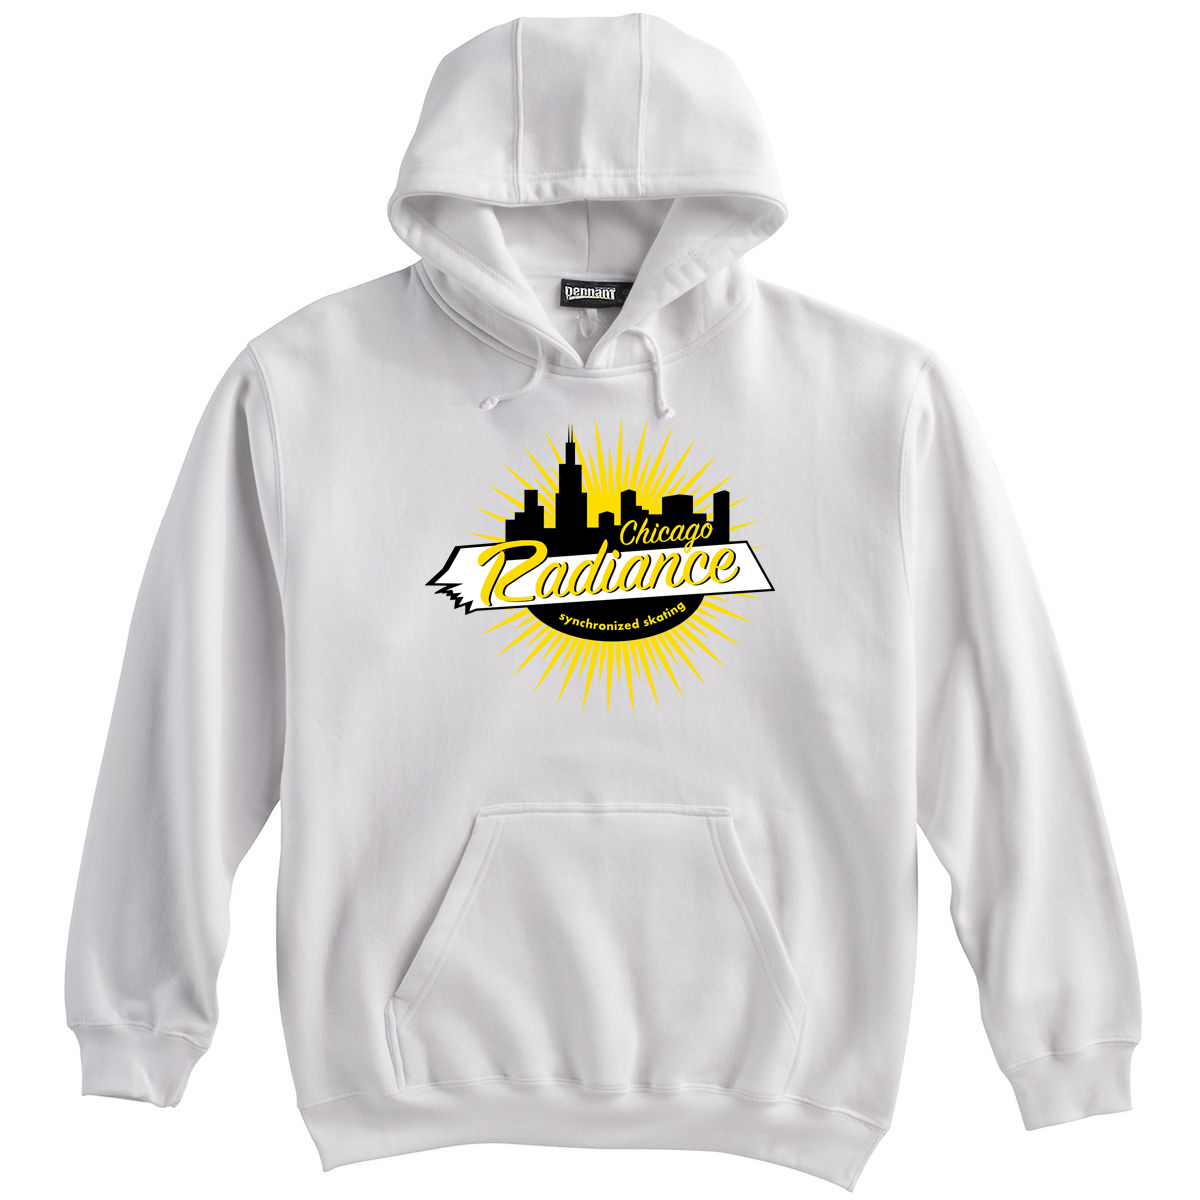 Chicago Radiance Sweatshirt